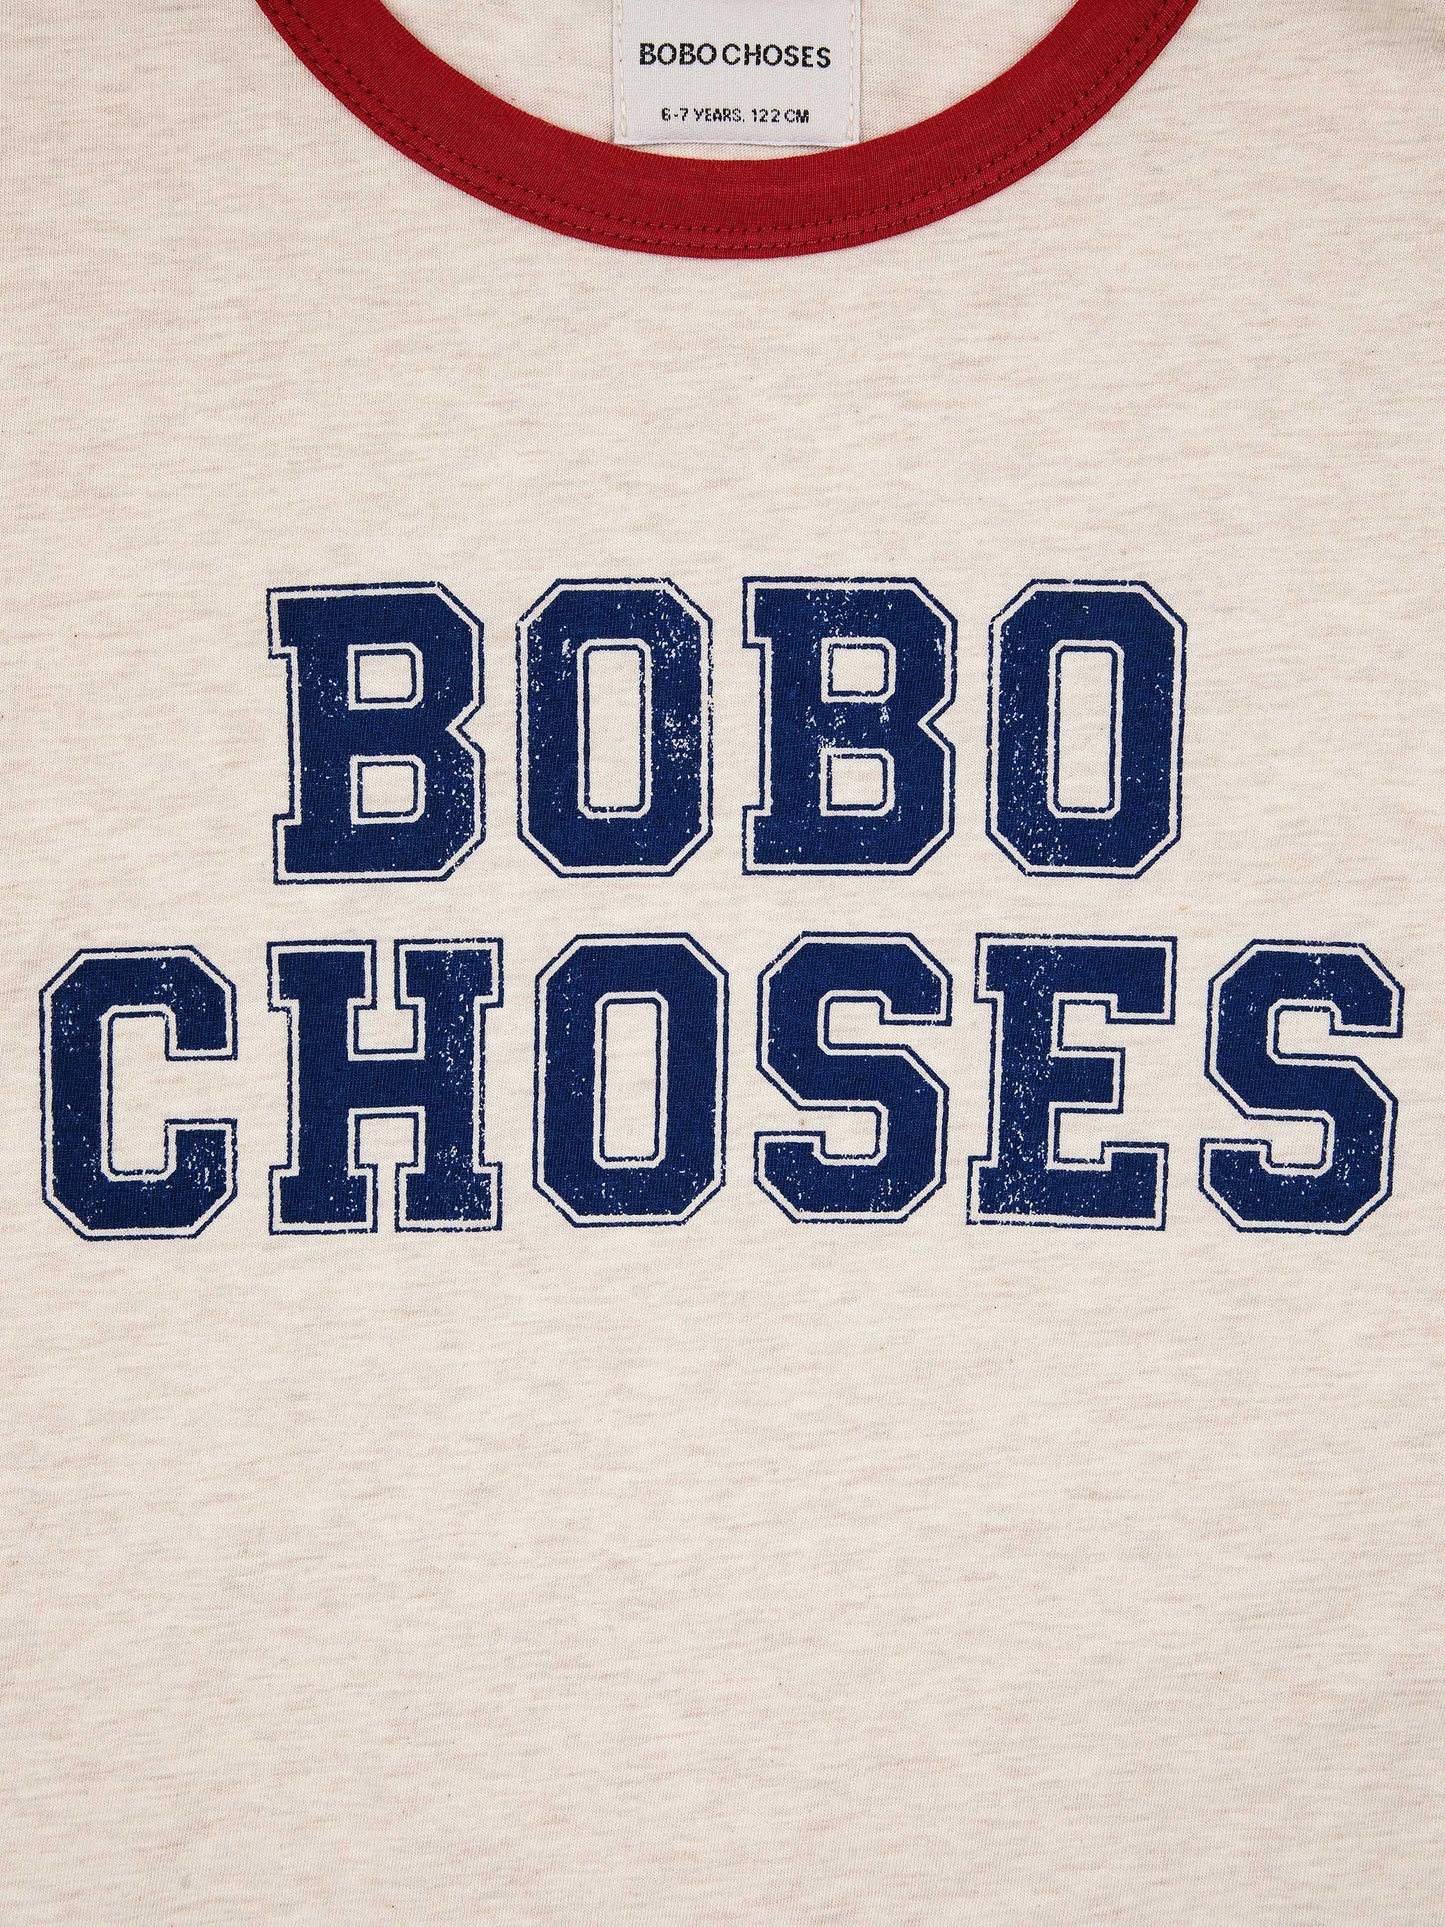 Bobo Choses Color Block long sleeve T-shirt